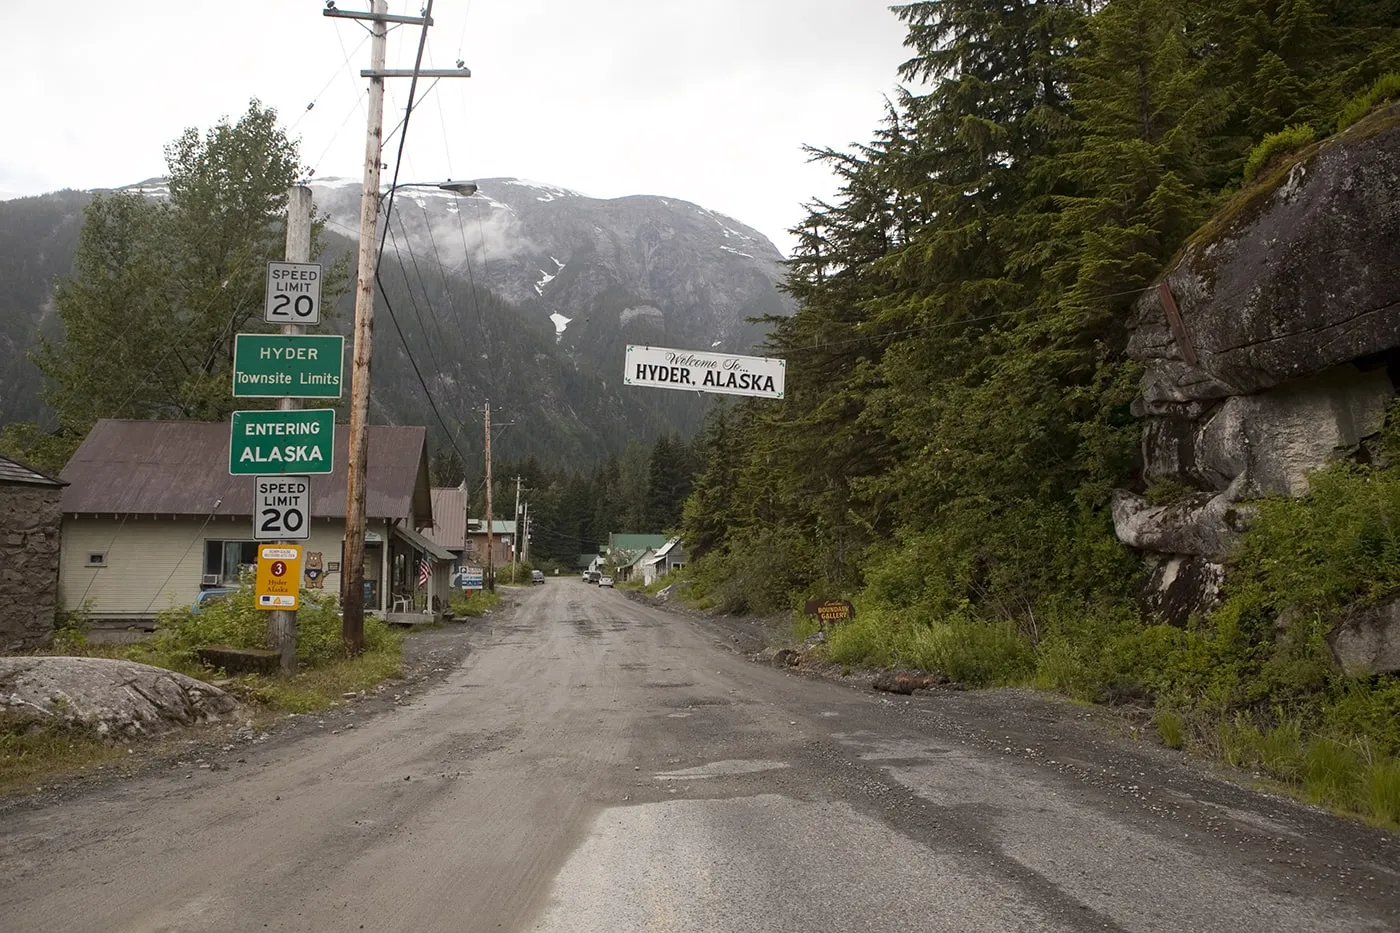 Welcome to Hyder, Alaska sign.